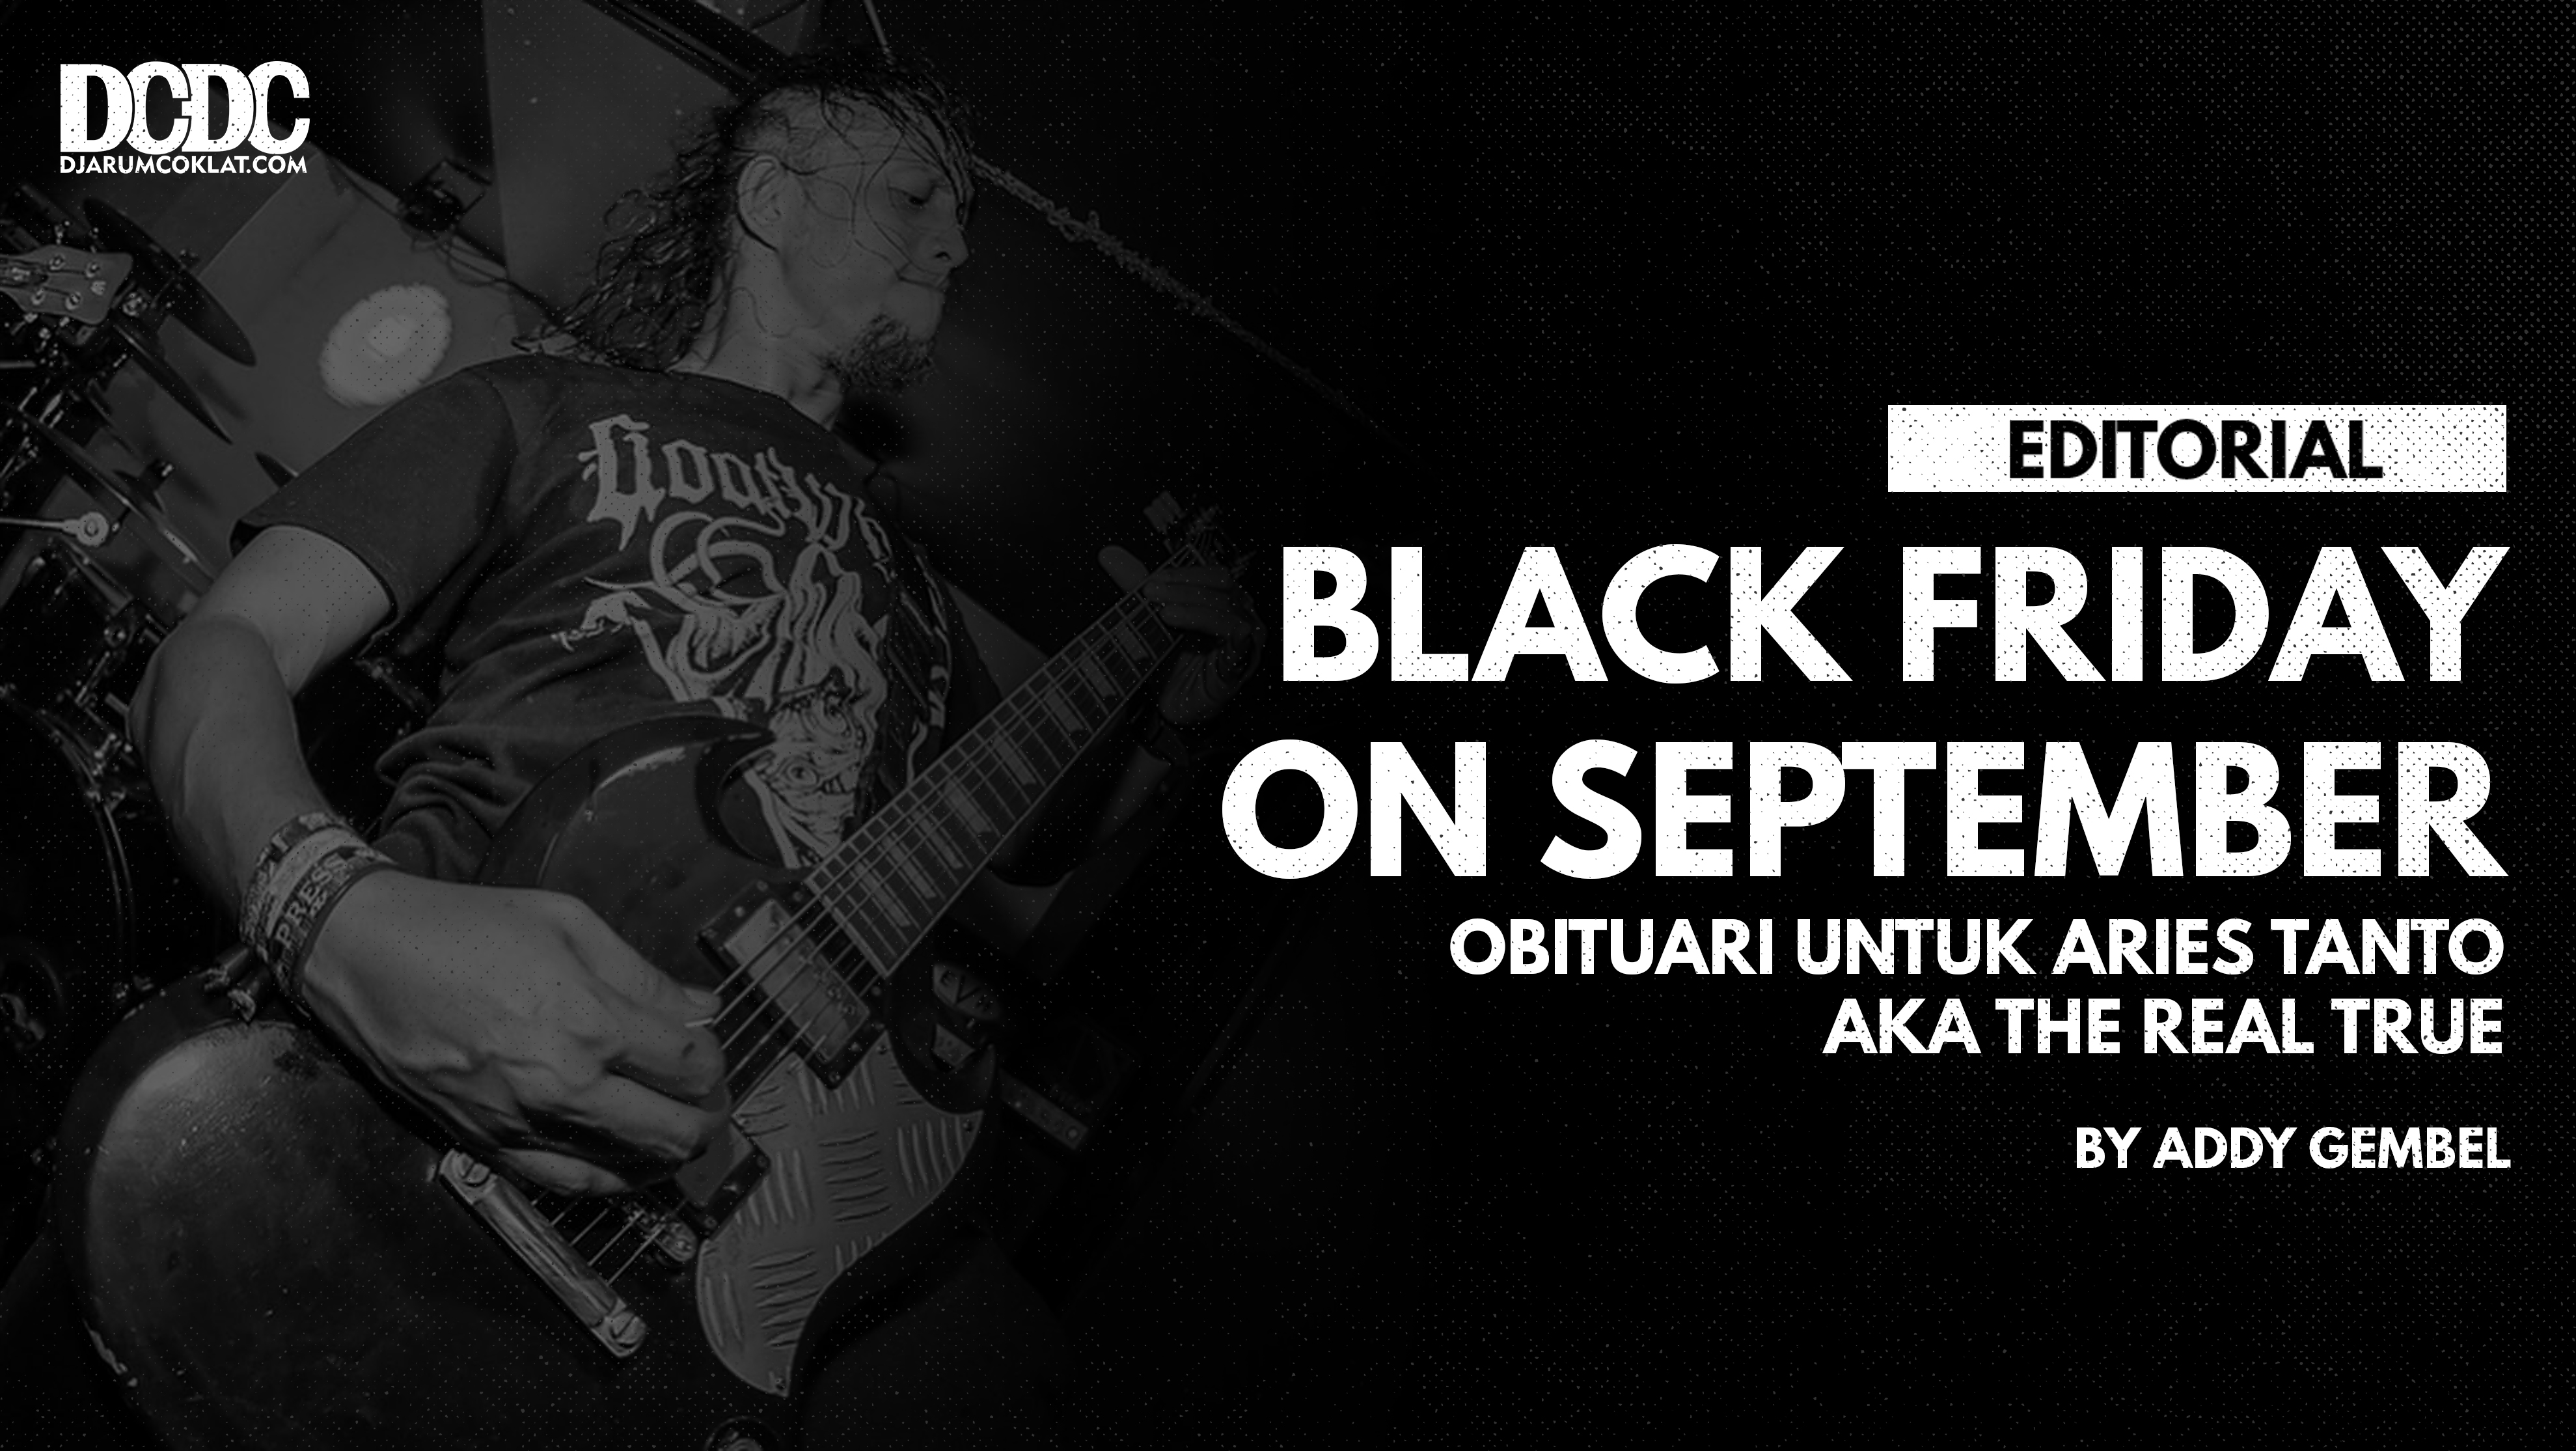 Black Friday On September, Obituari Untuk Aries Tanto aka The Real True